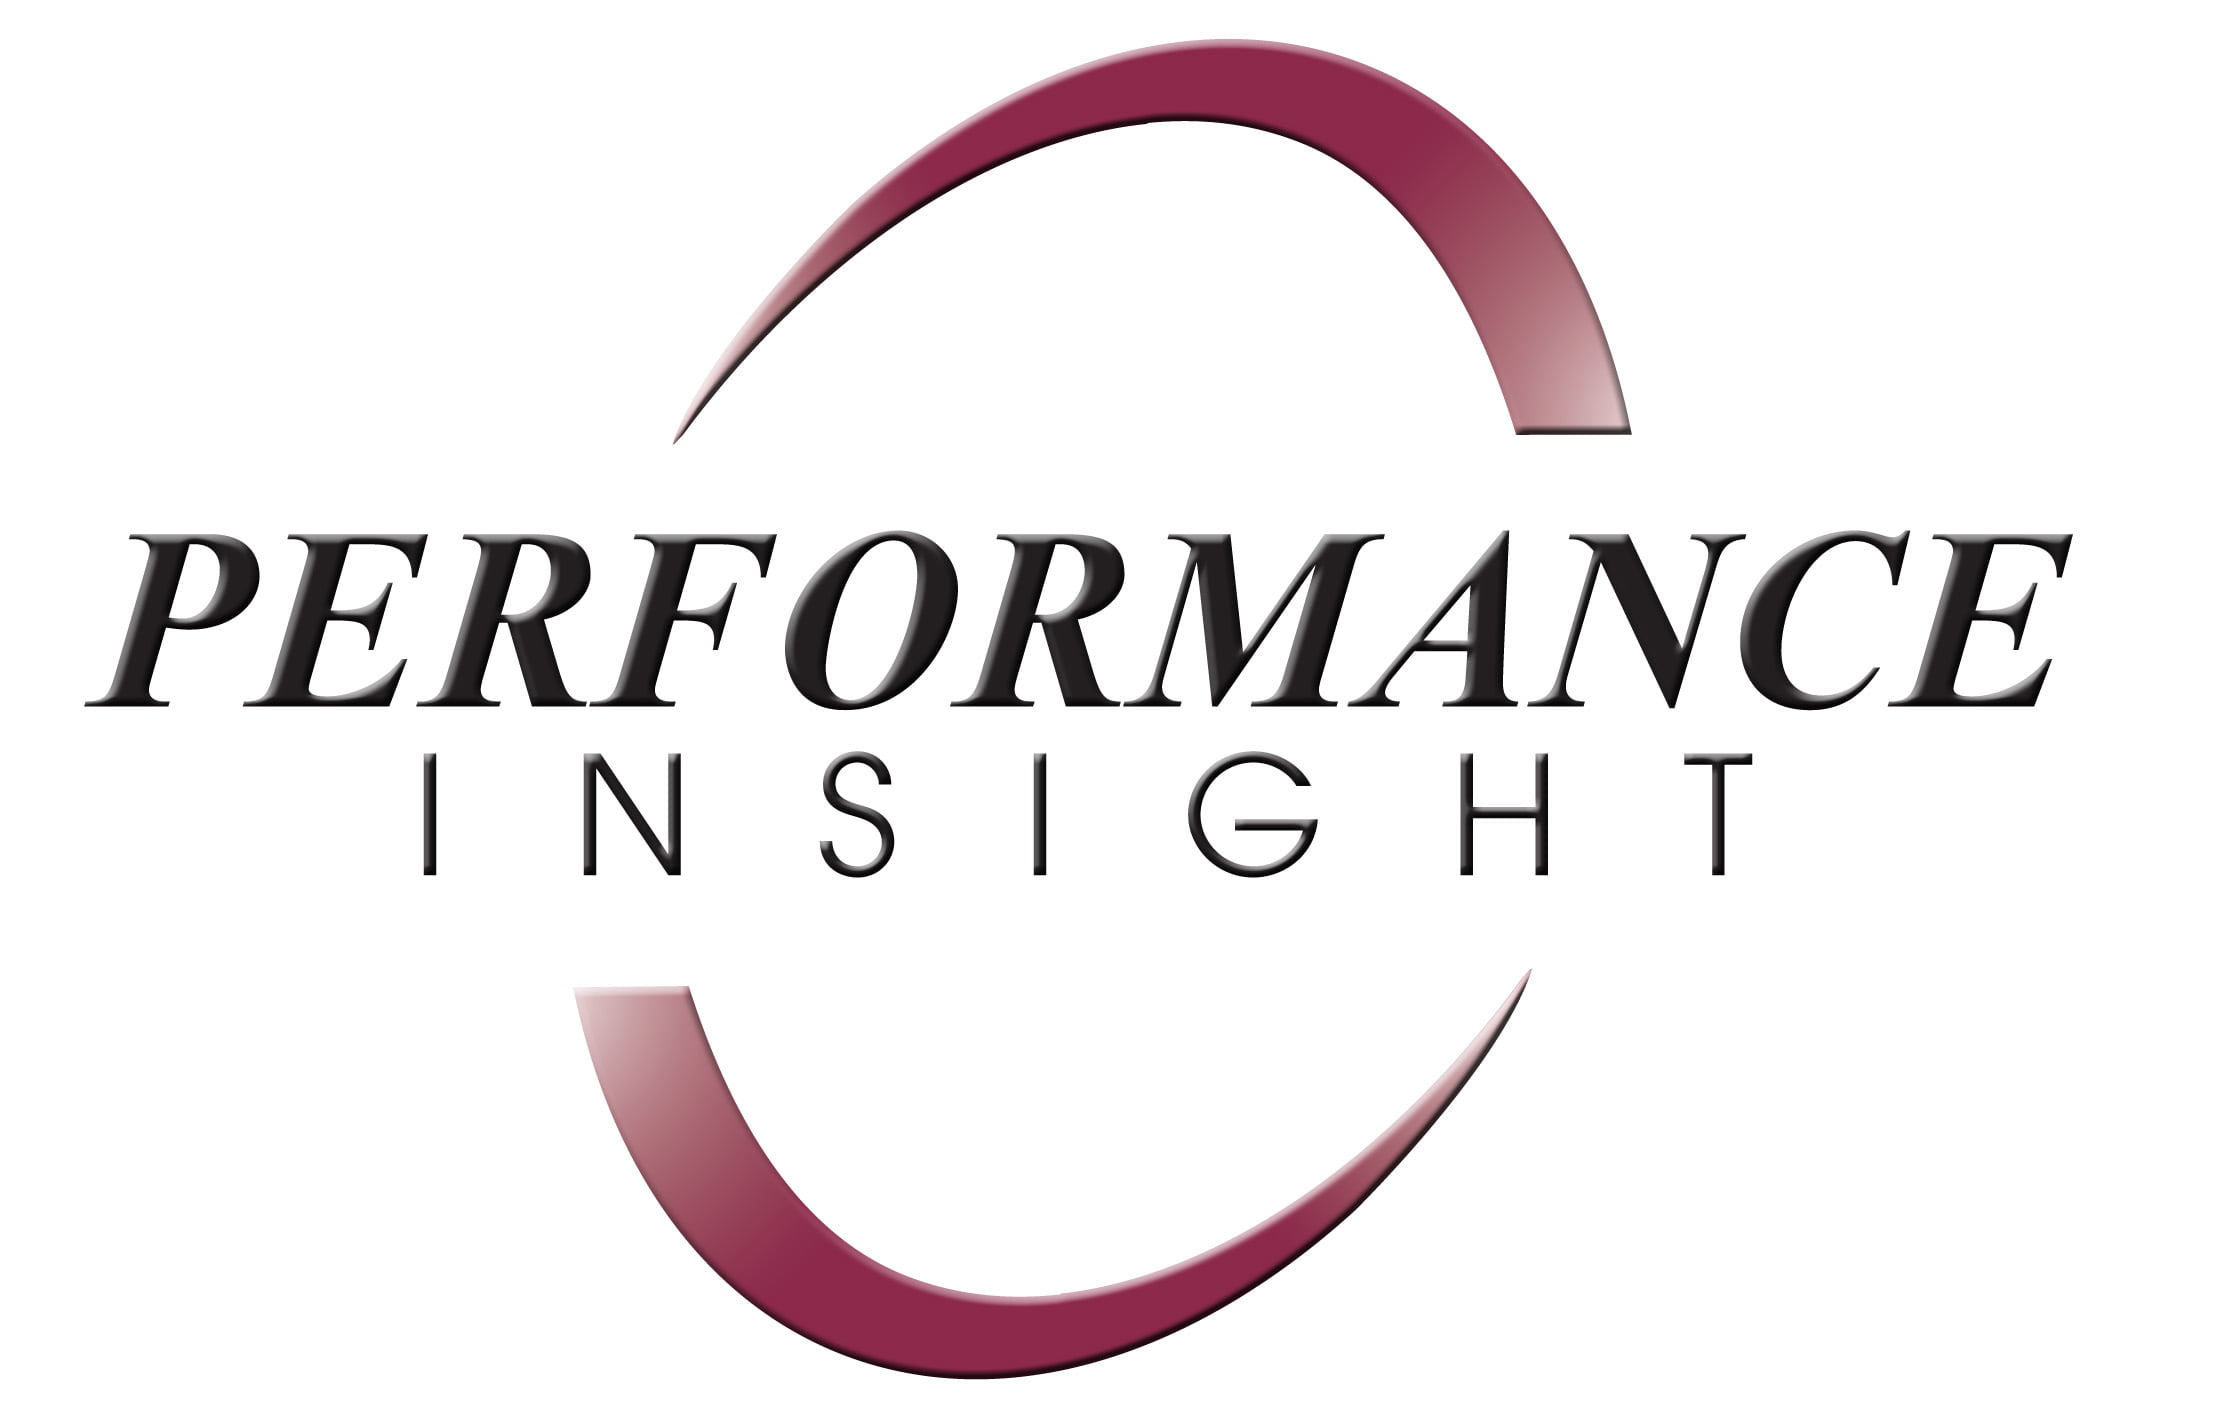 Performance Insight